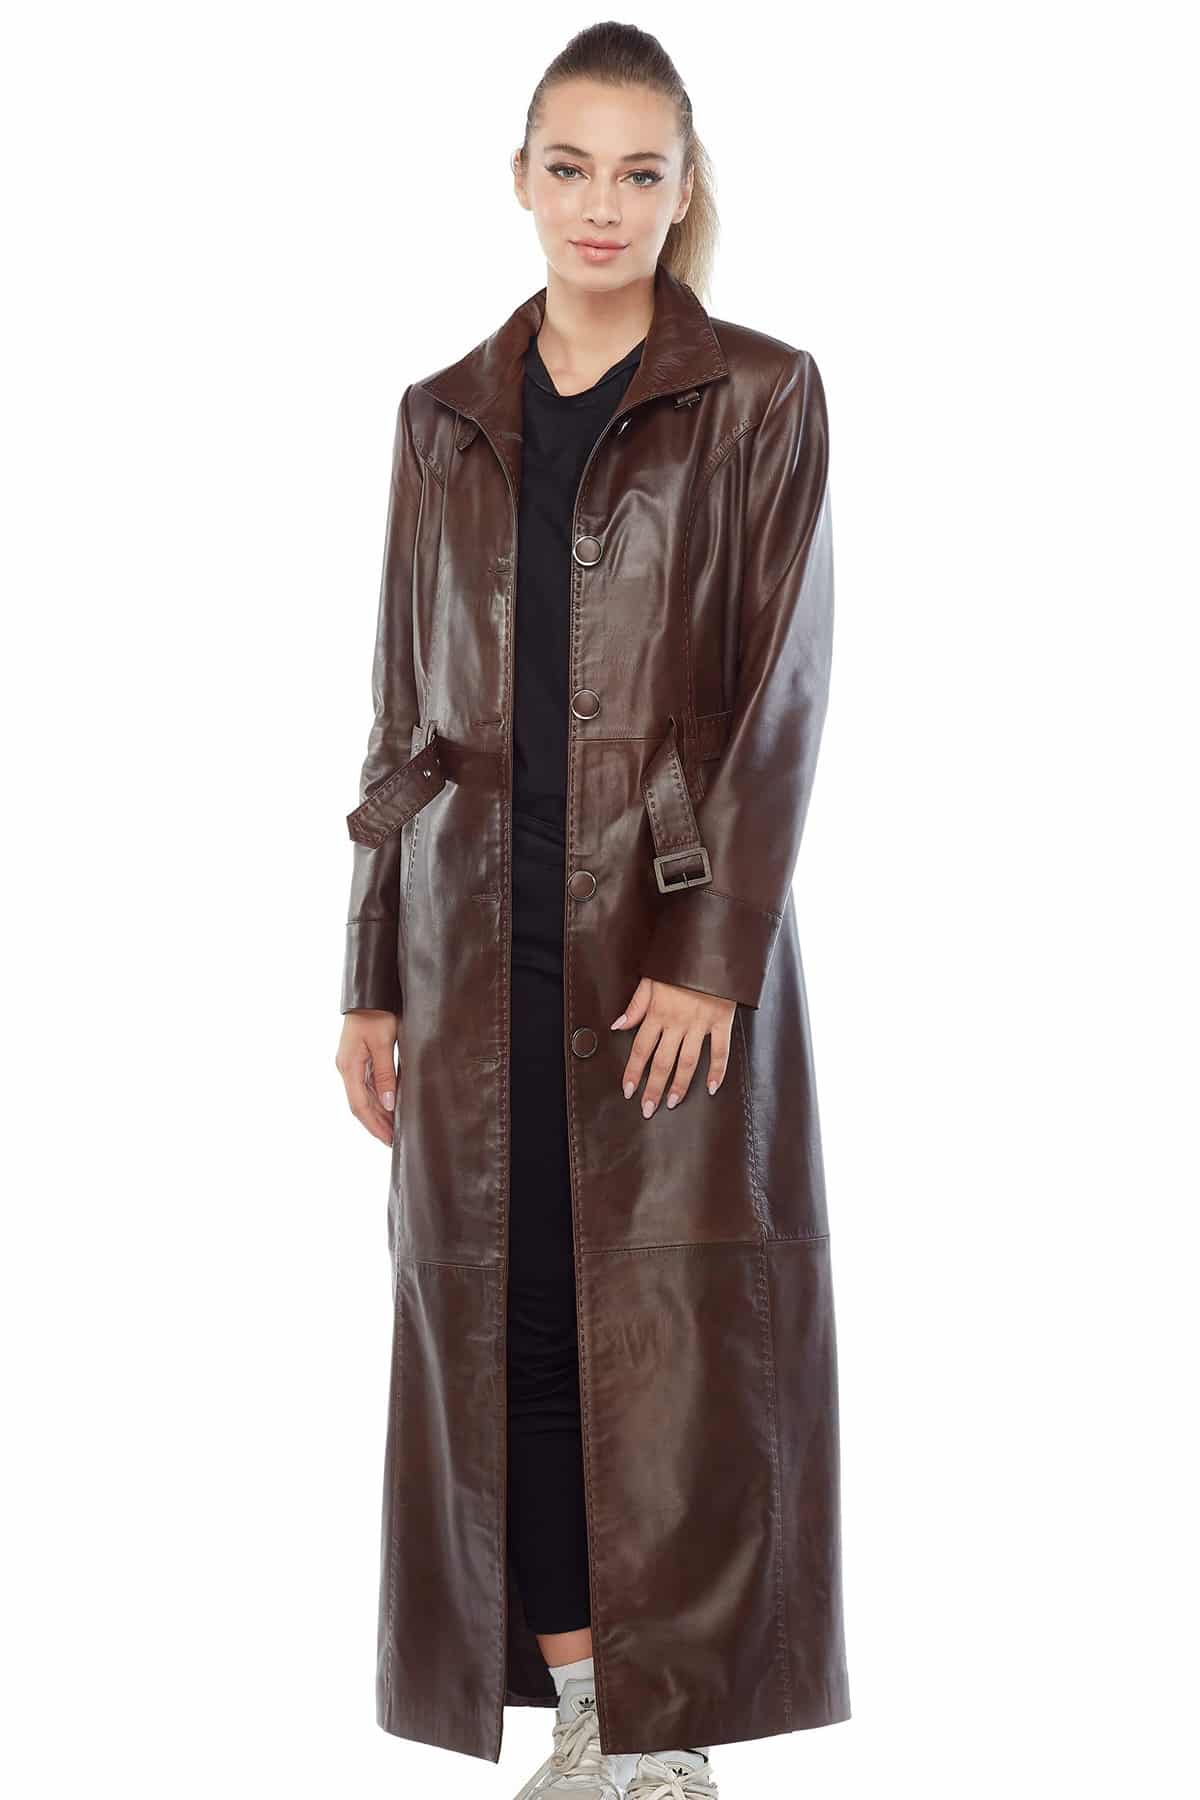 RESTIR REAL far REAL leather long coat | nate-hospital.com